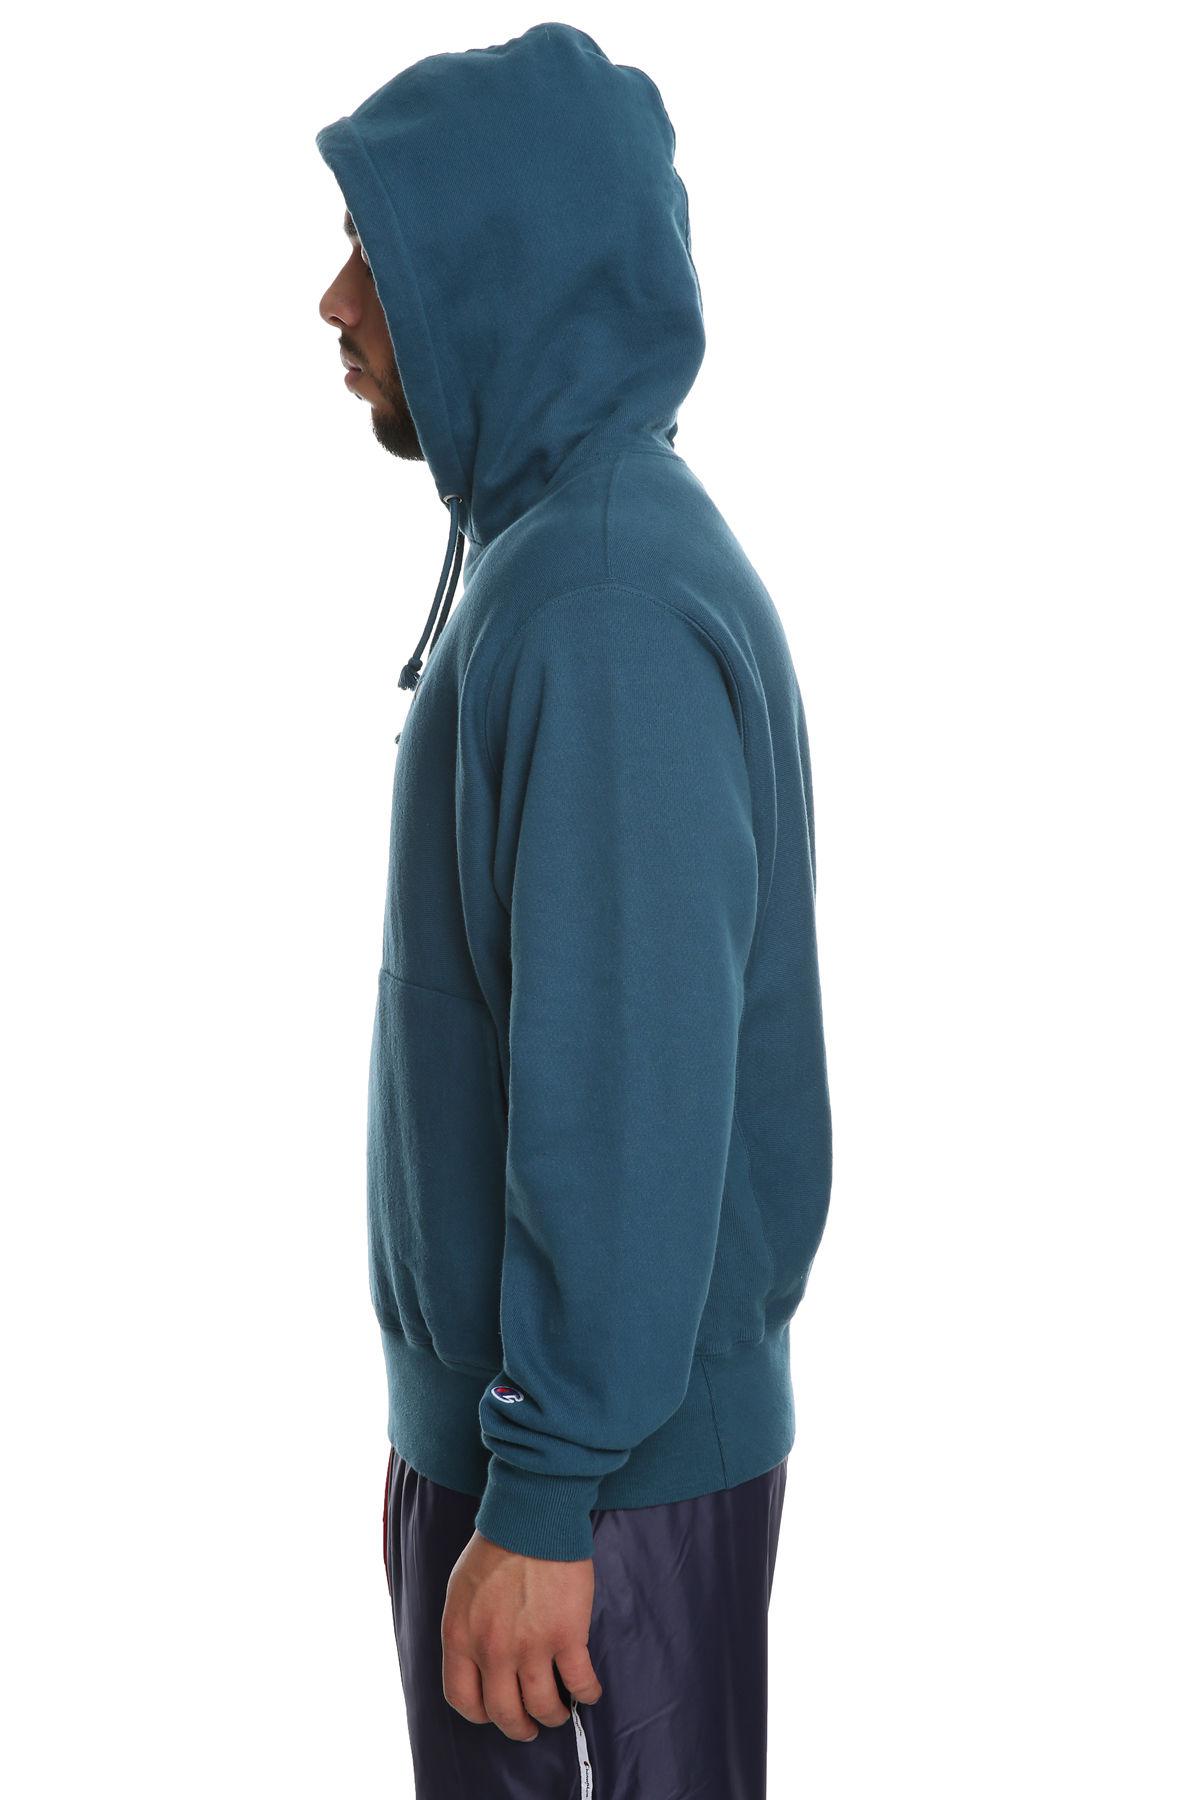 juniper blue champion hoodie